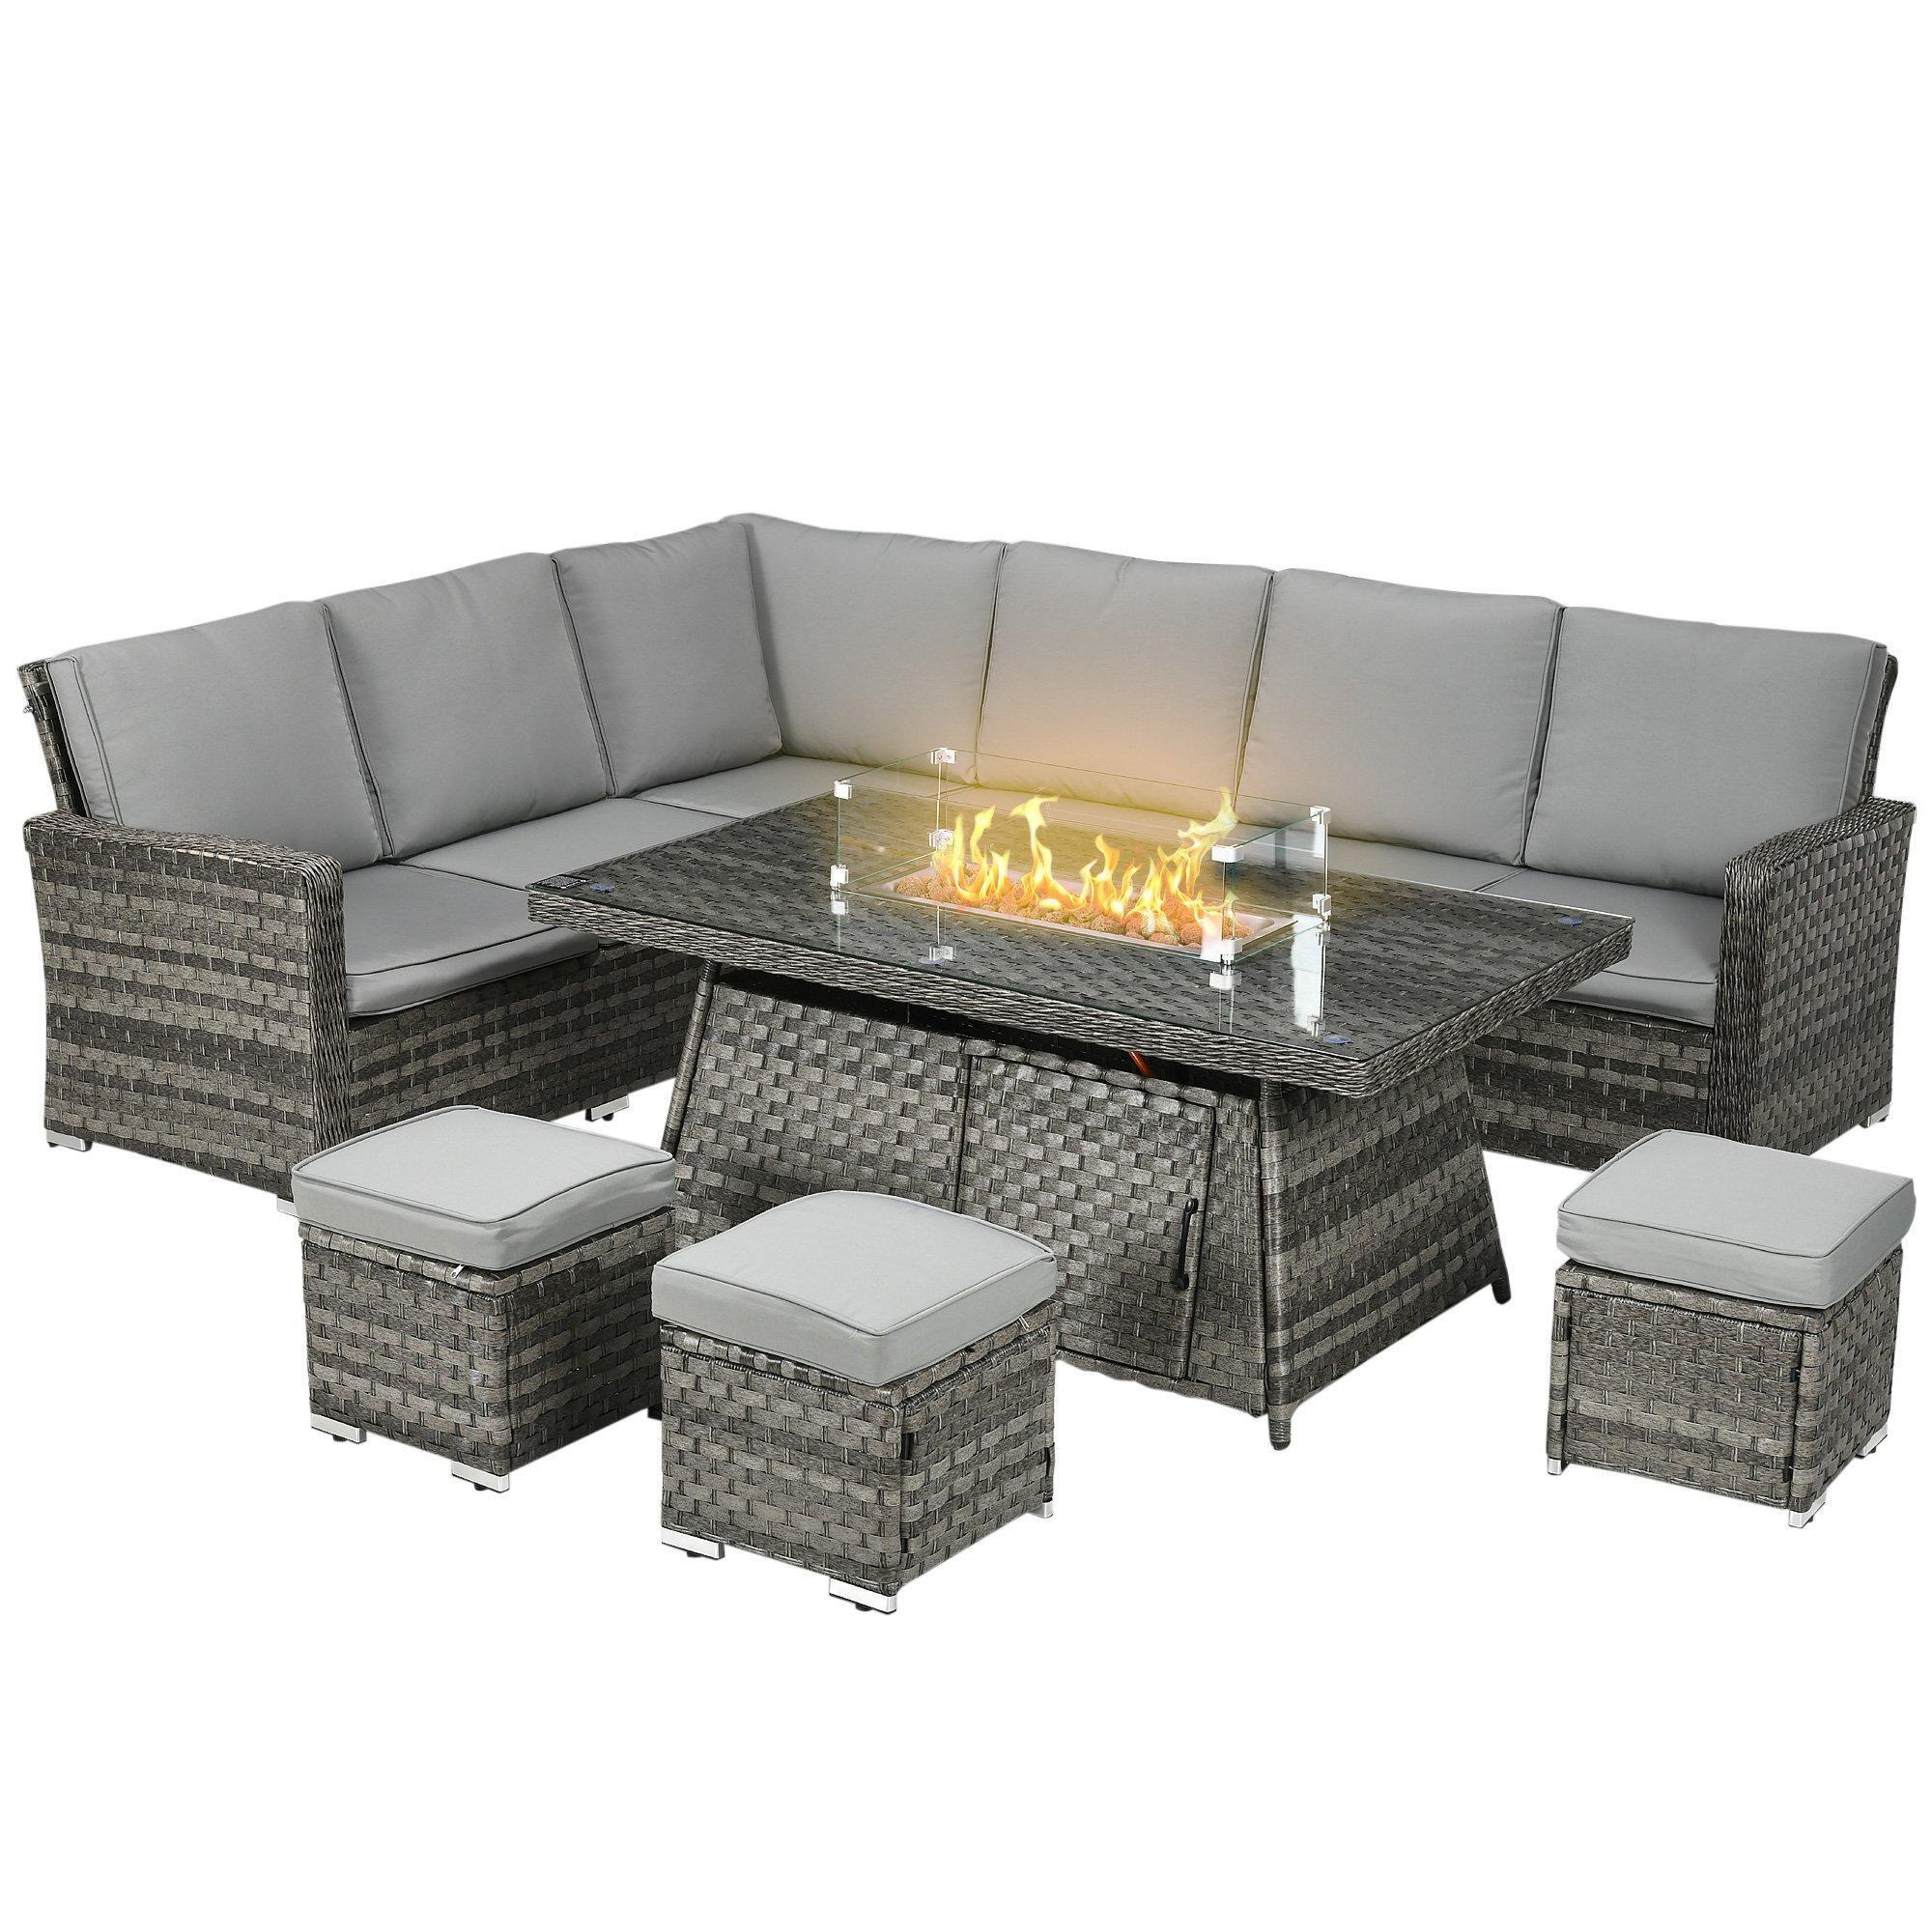 7 Pieces Rattan Garden Furniture Set w/ 50,000 BTU Gas Fire Pit Table Grey - image 1